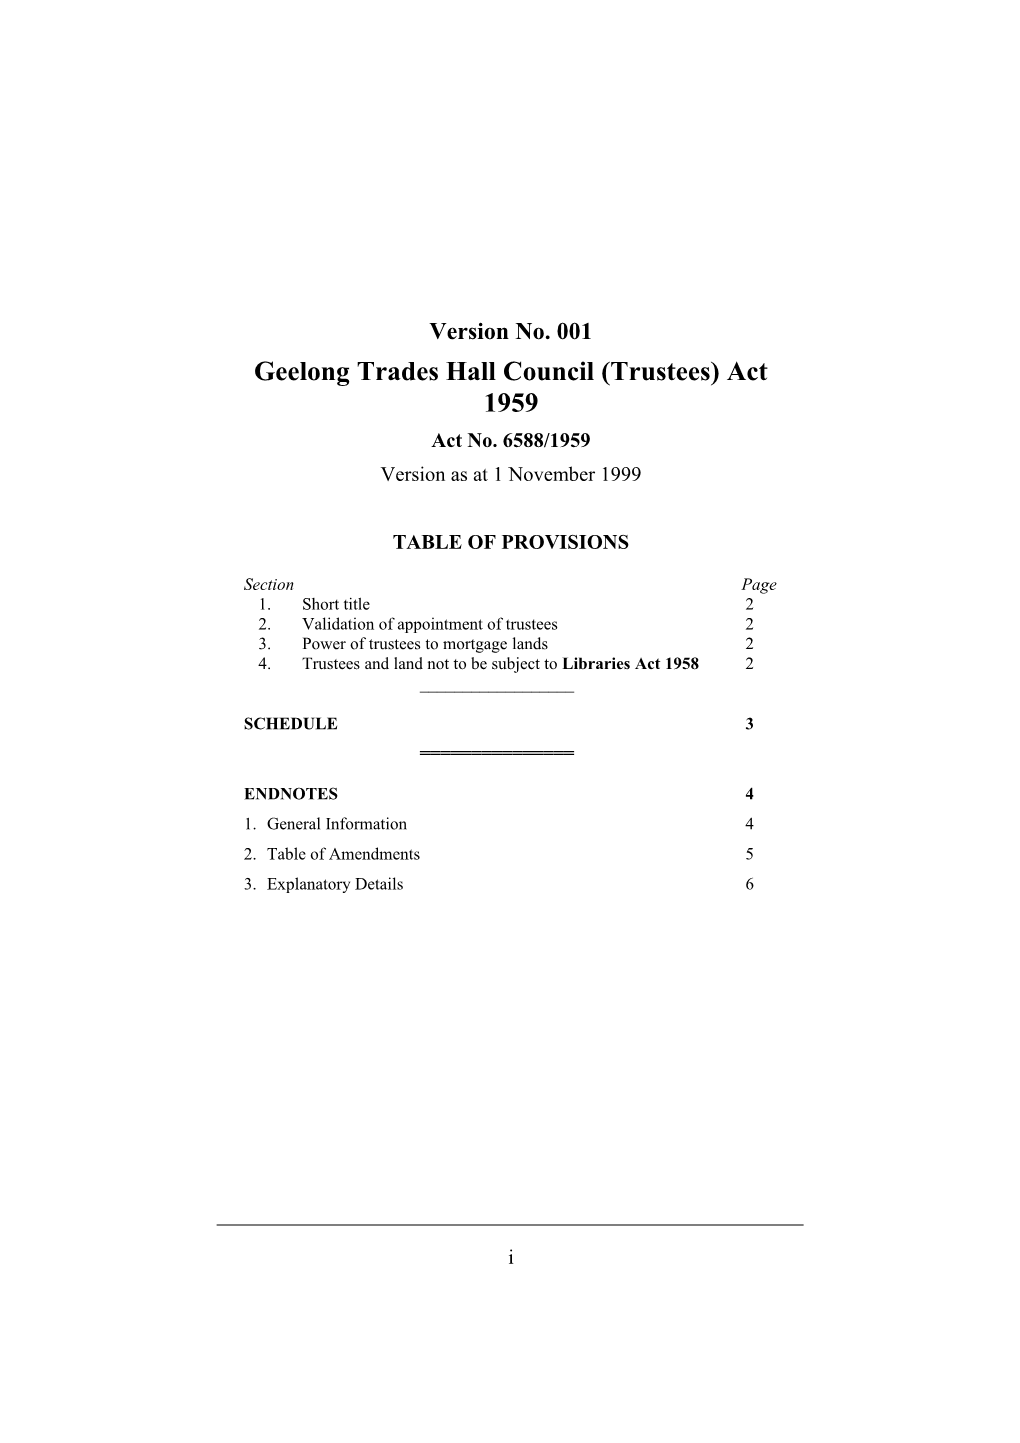 Geelong Trades Hall Council (Trustees) Act 1959